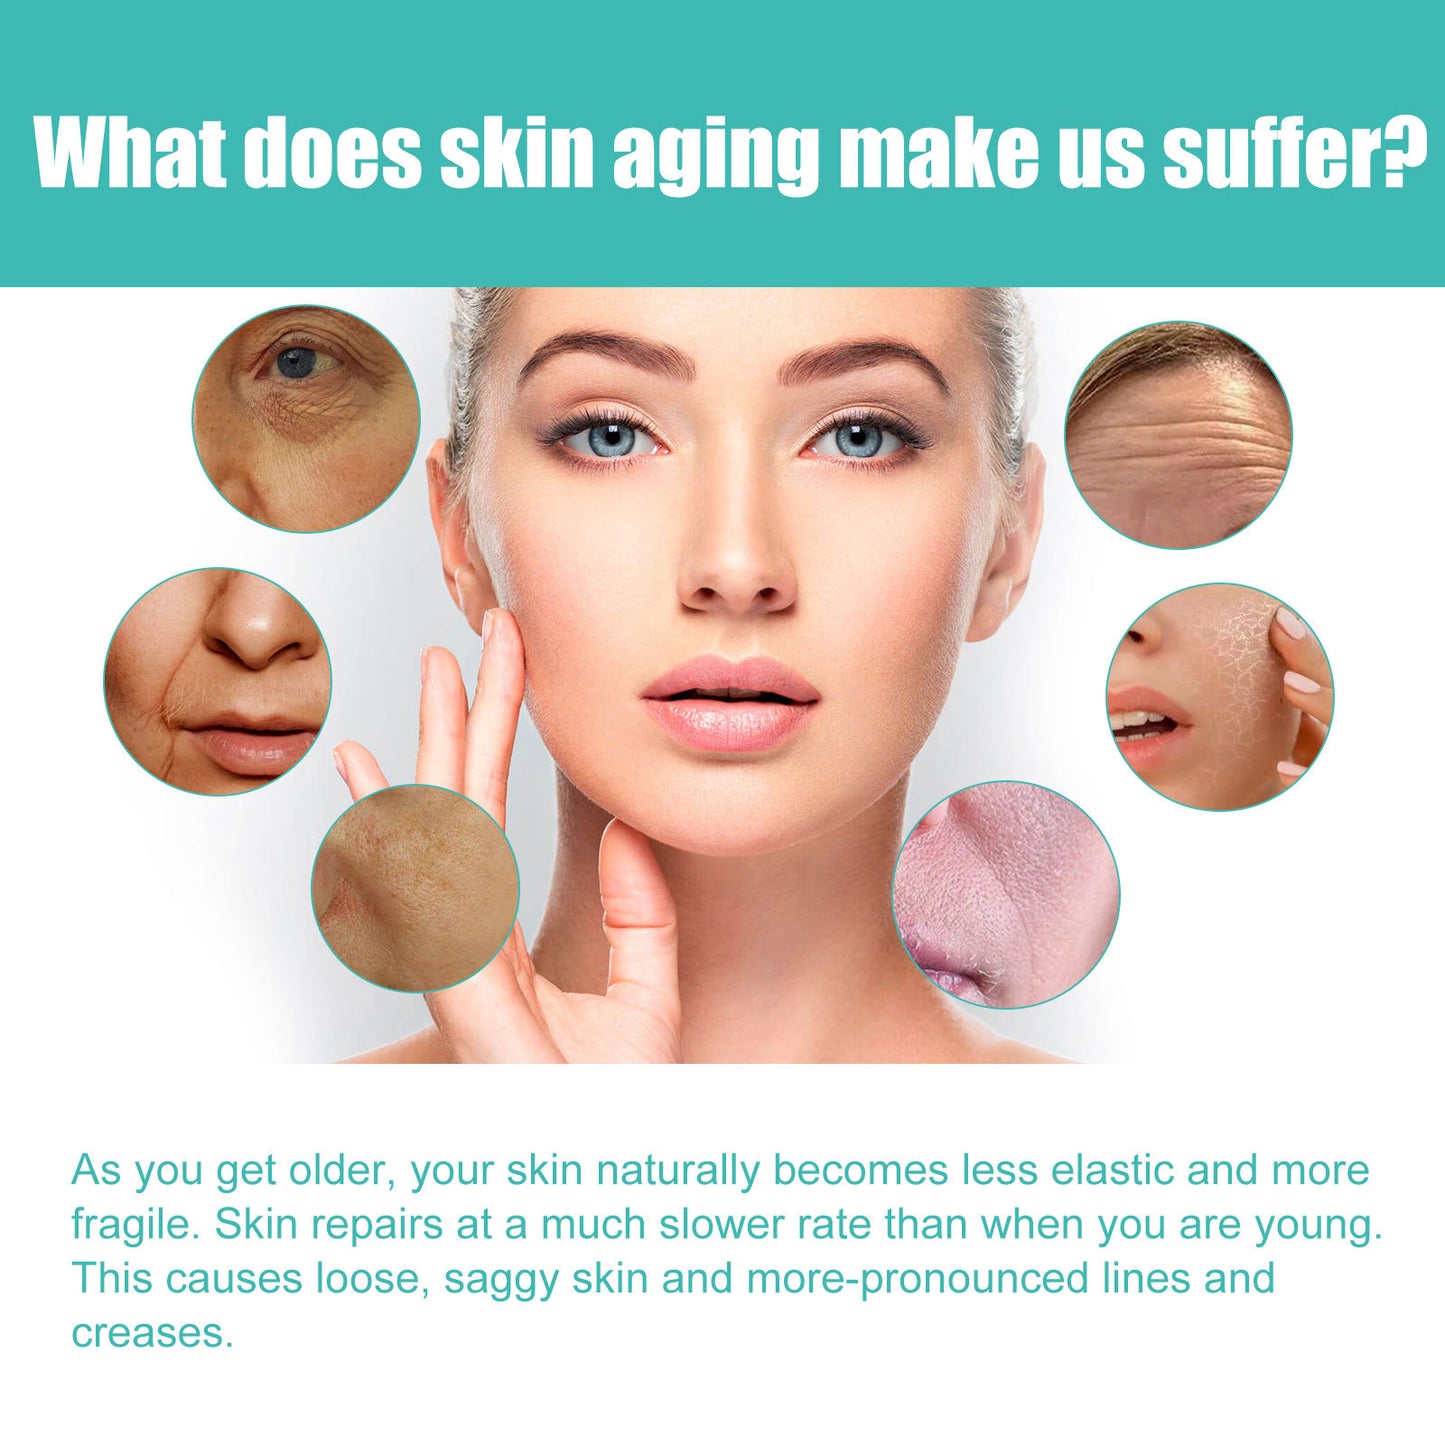 EELHOE Instant Wrinkle Remover Serum Vitamin C Anti-Aging Moisturizing Lifting Firming Skin Fade Fine Lines Face Essence(30ml)